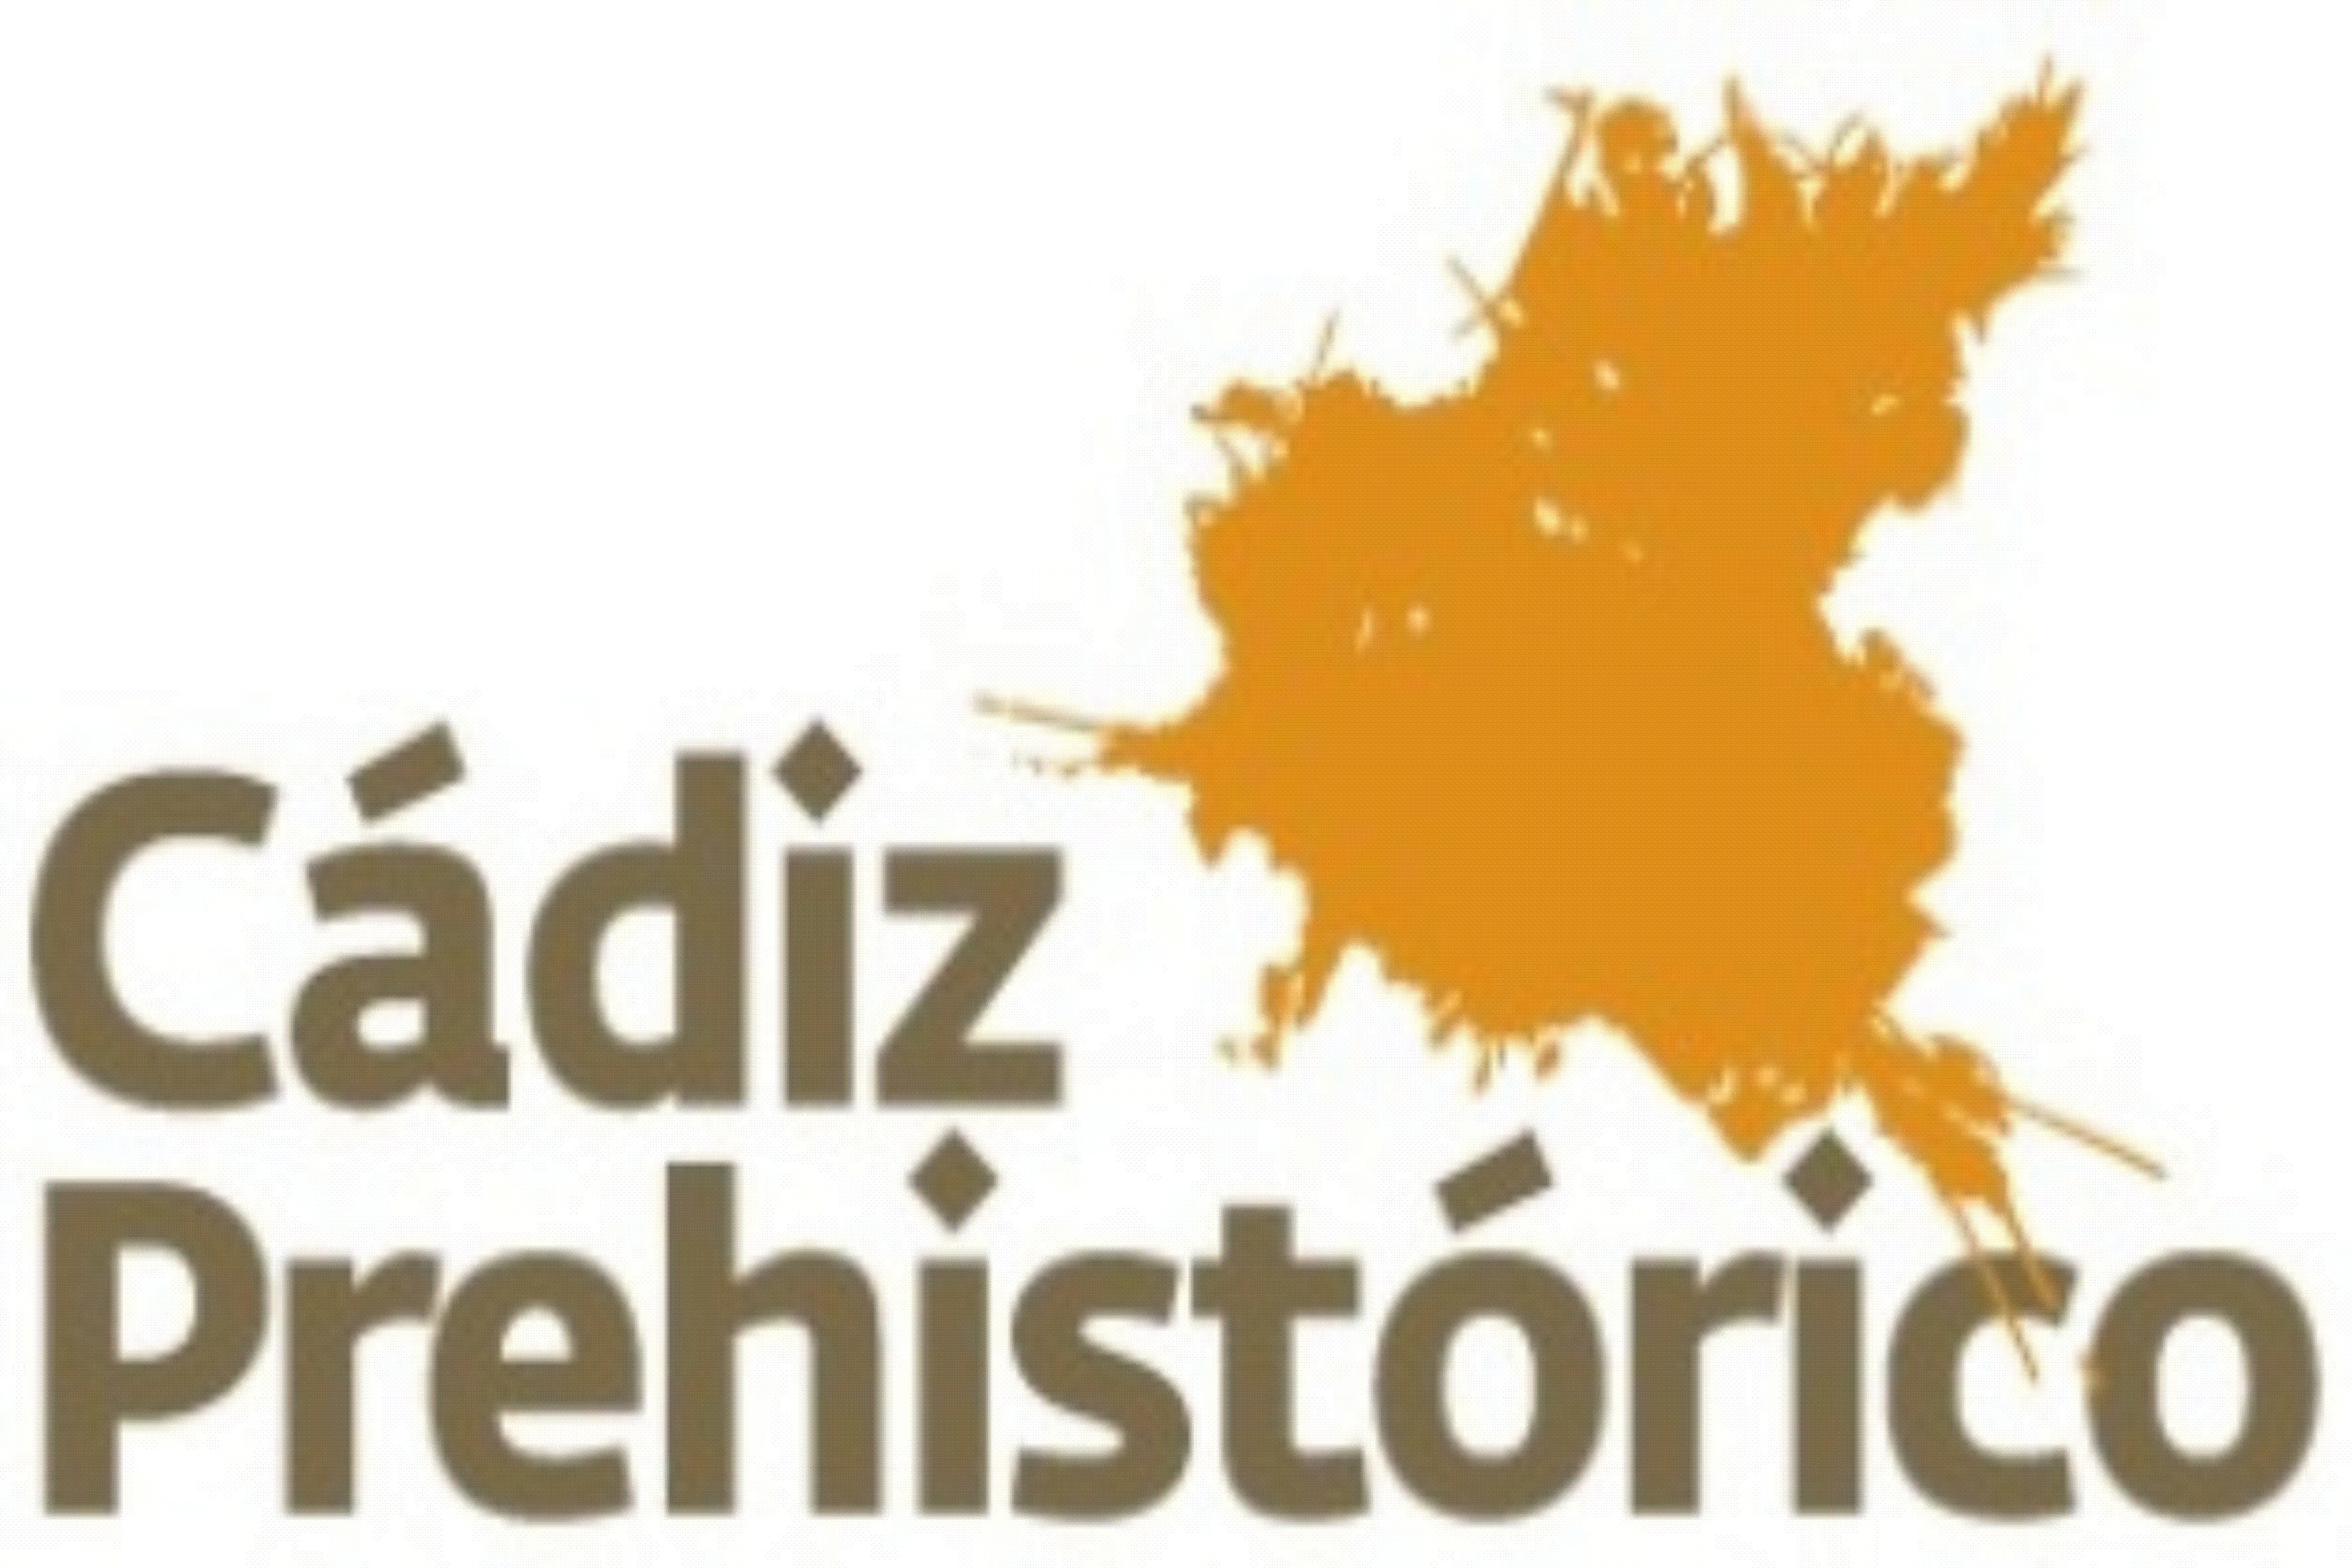 Logo Cadiz Prehistorico 